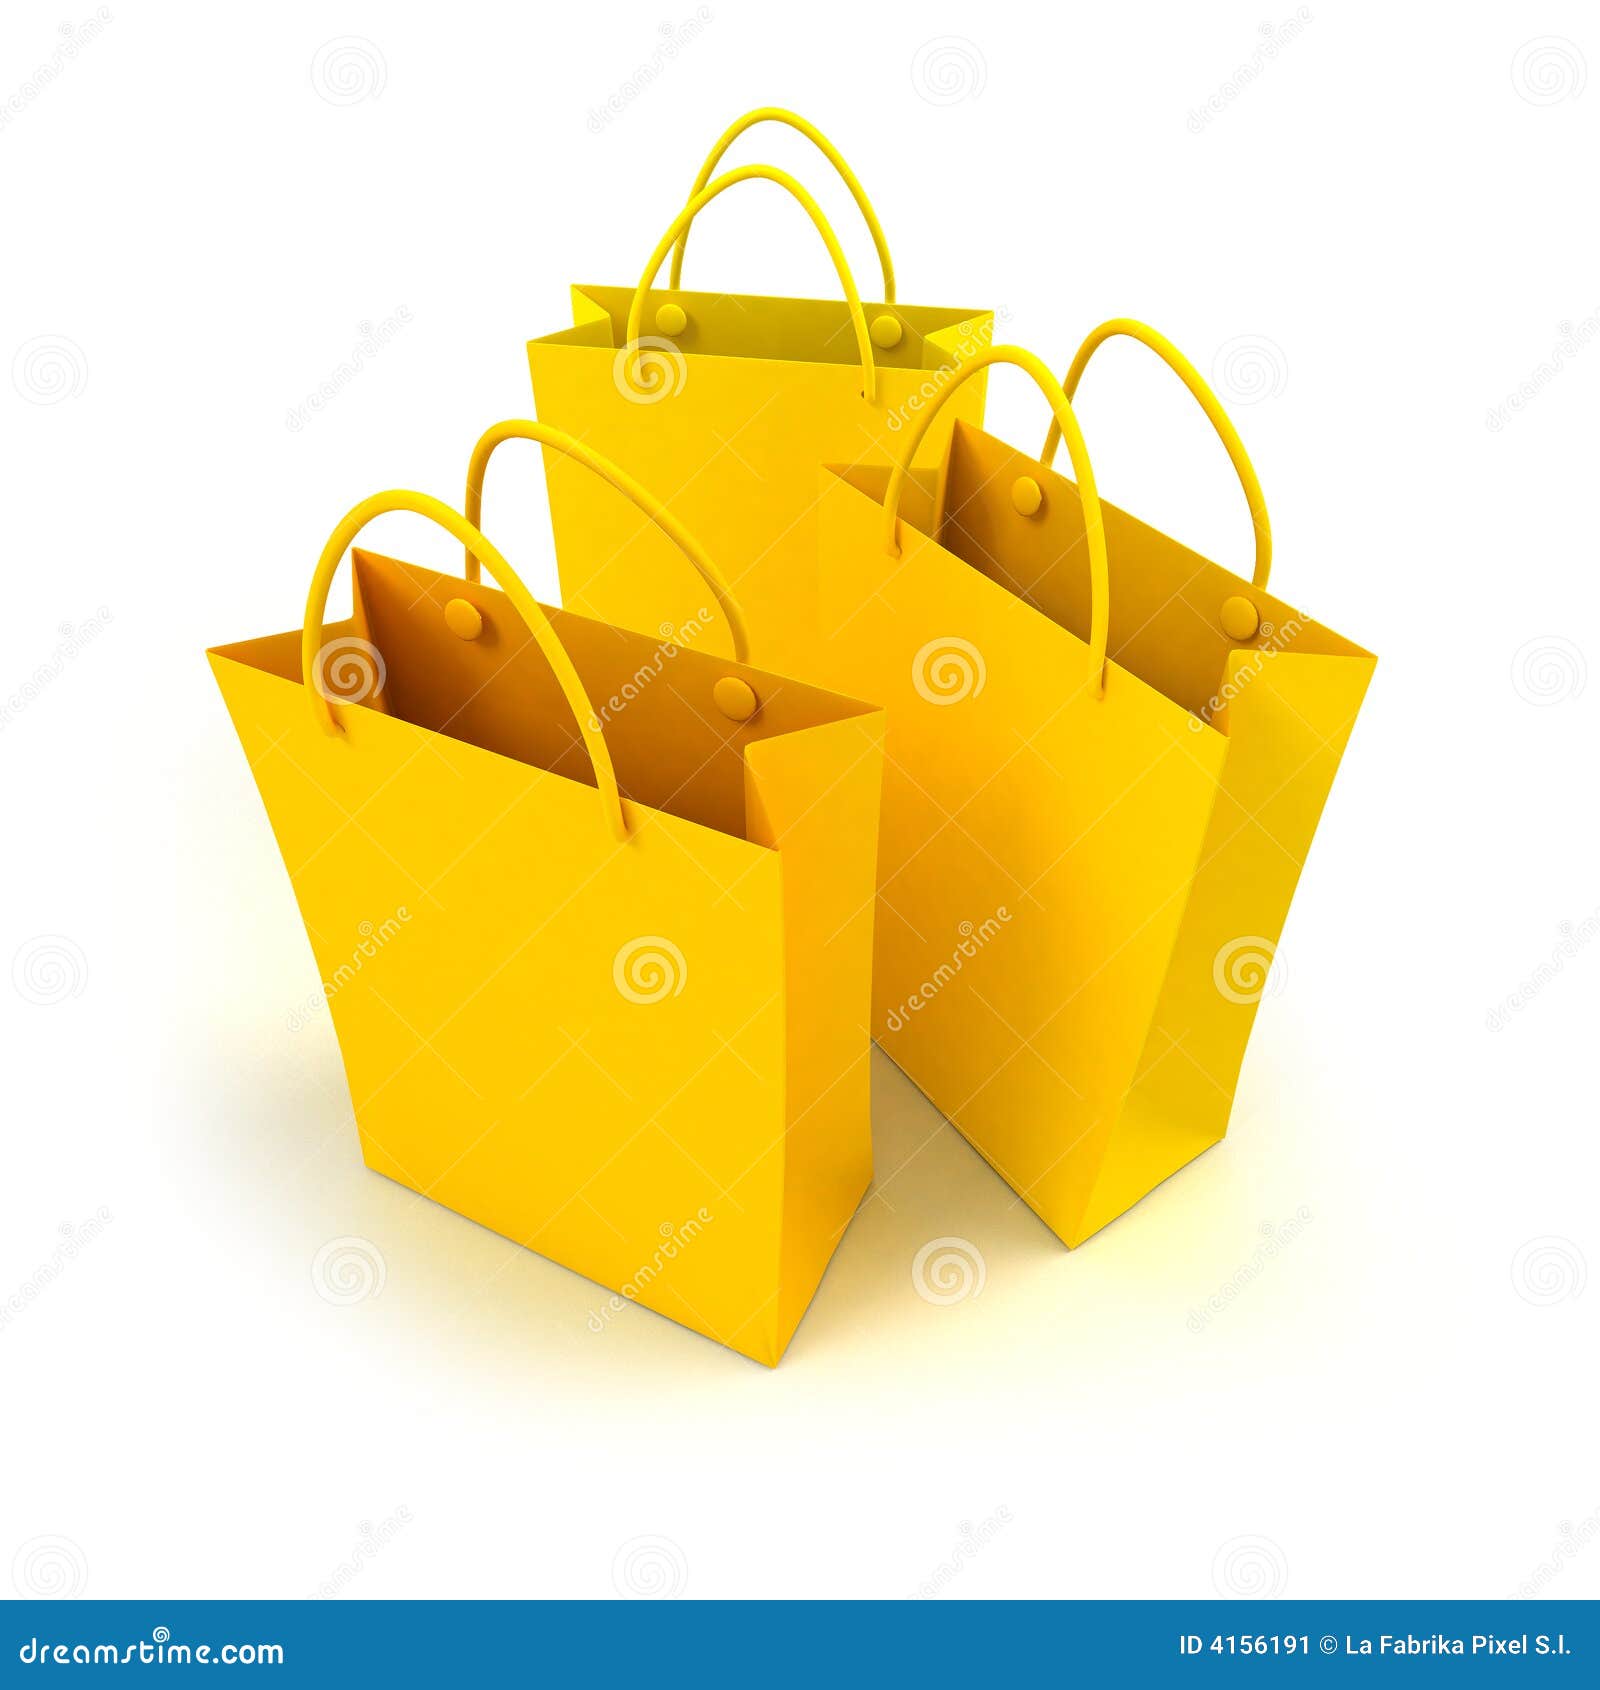 Yellow shopping bags trio stock illustration. Illustration of buying ...